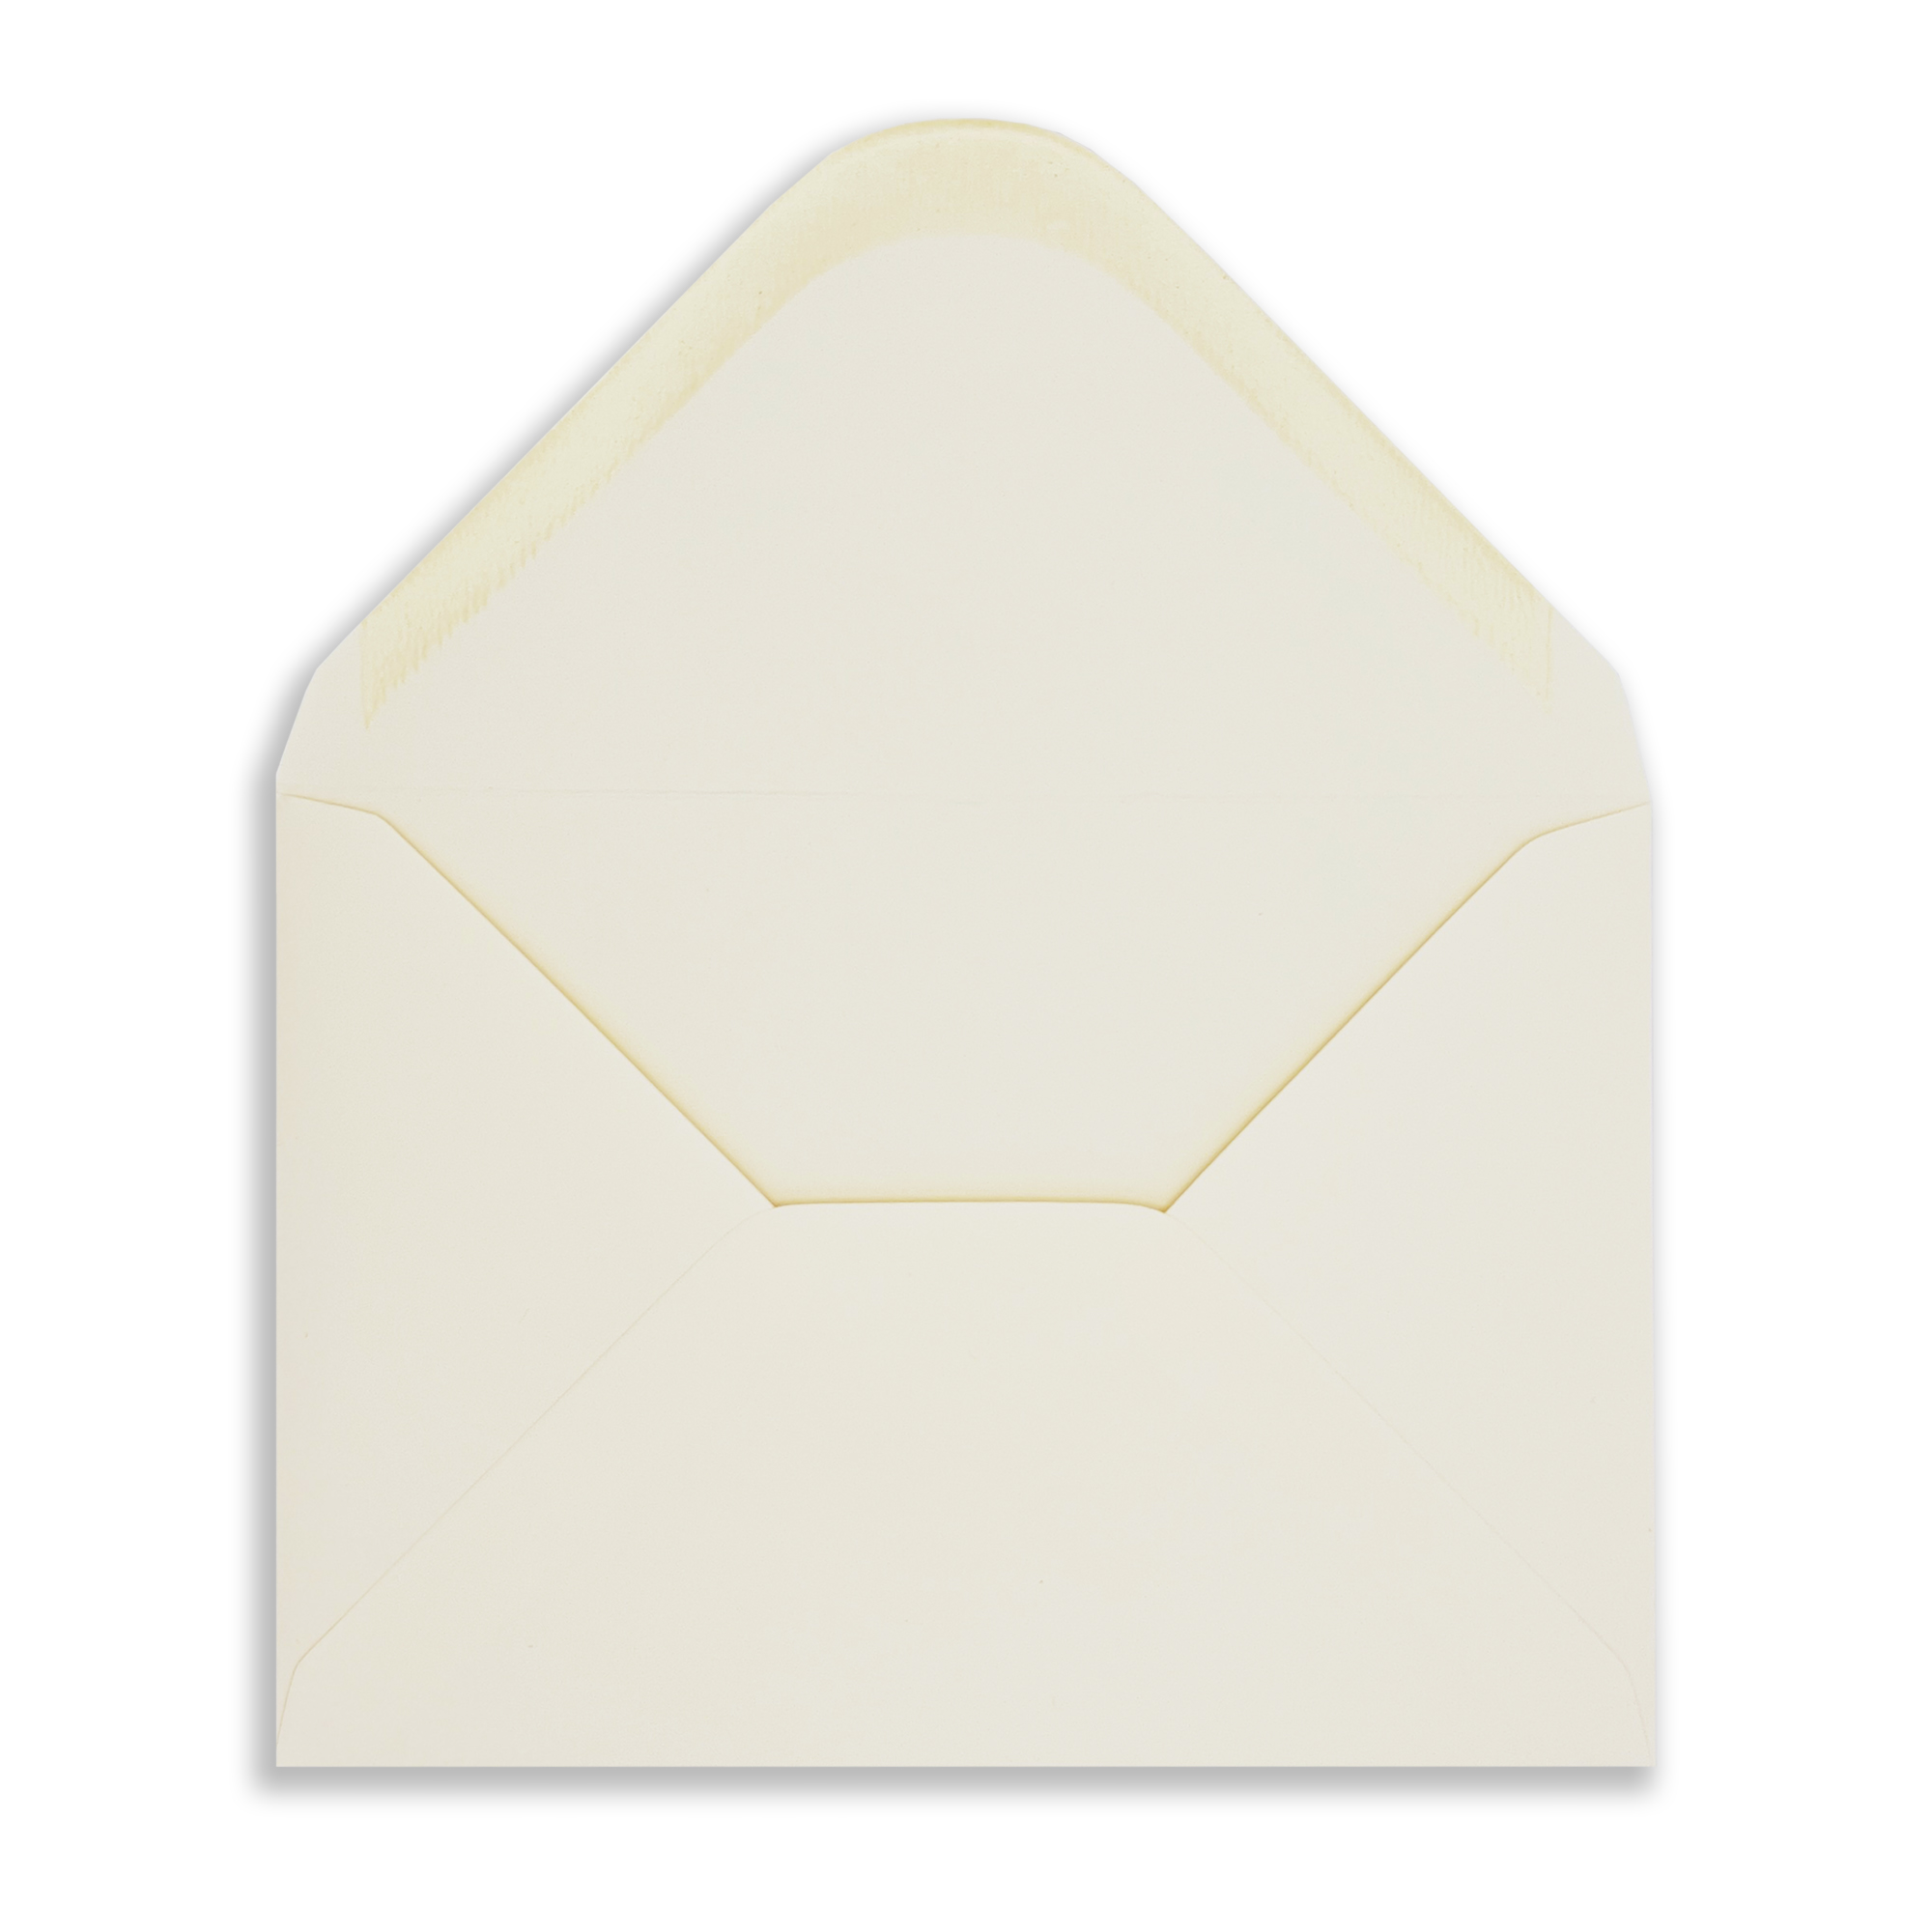 c6-cream-envelopes-open-flap